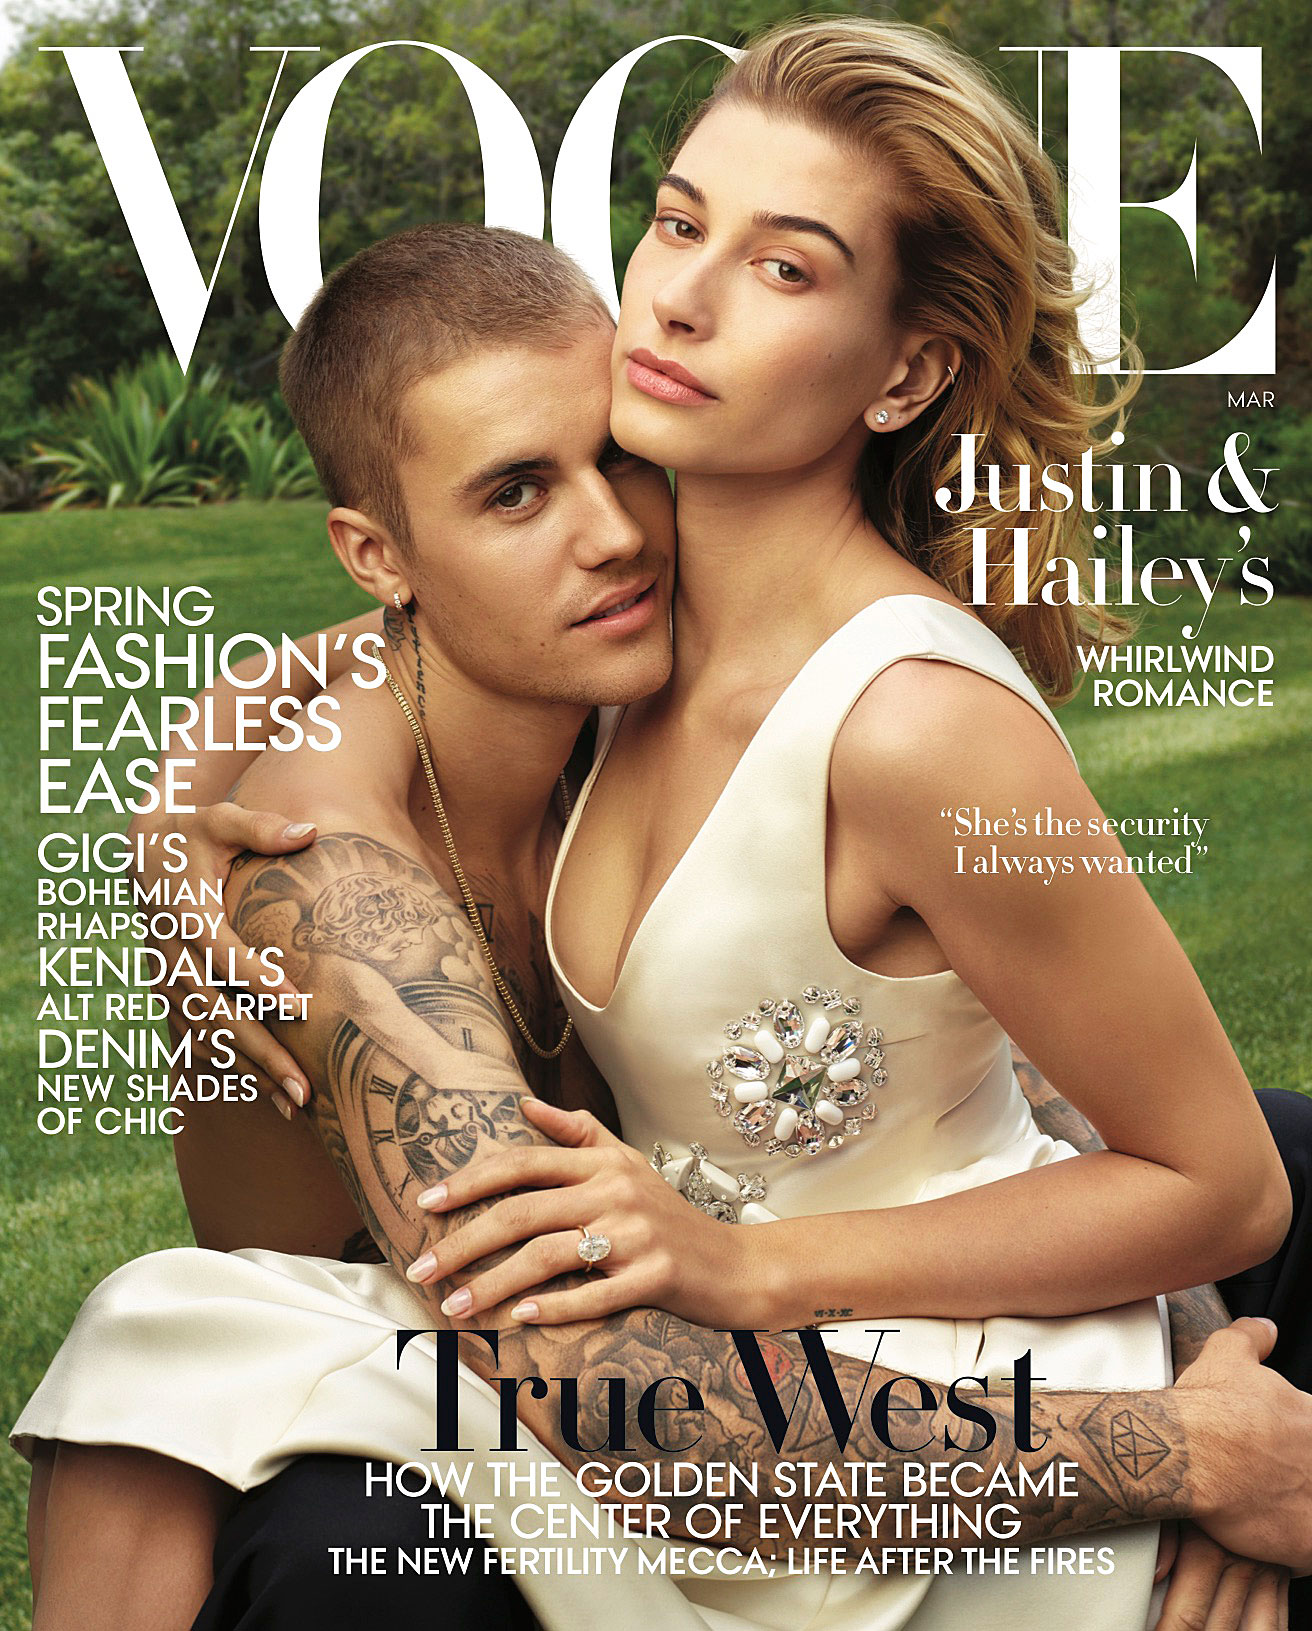 Justin Bieber Hailey Baldwin Vogue Revelations Celibacy Fighting Not Easy Marriage